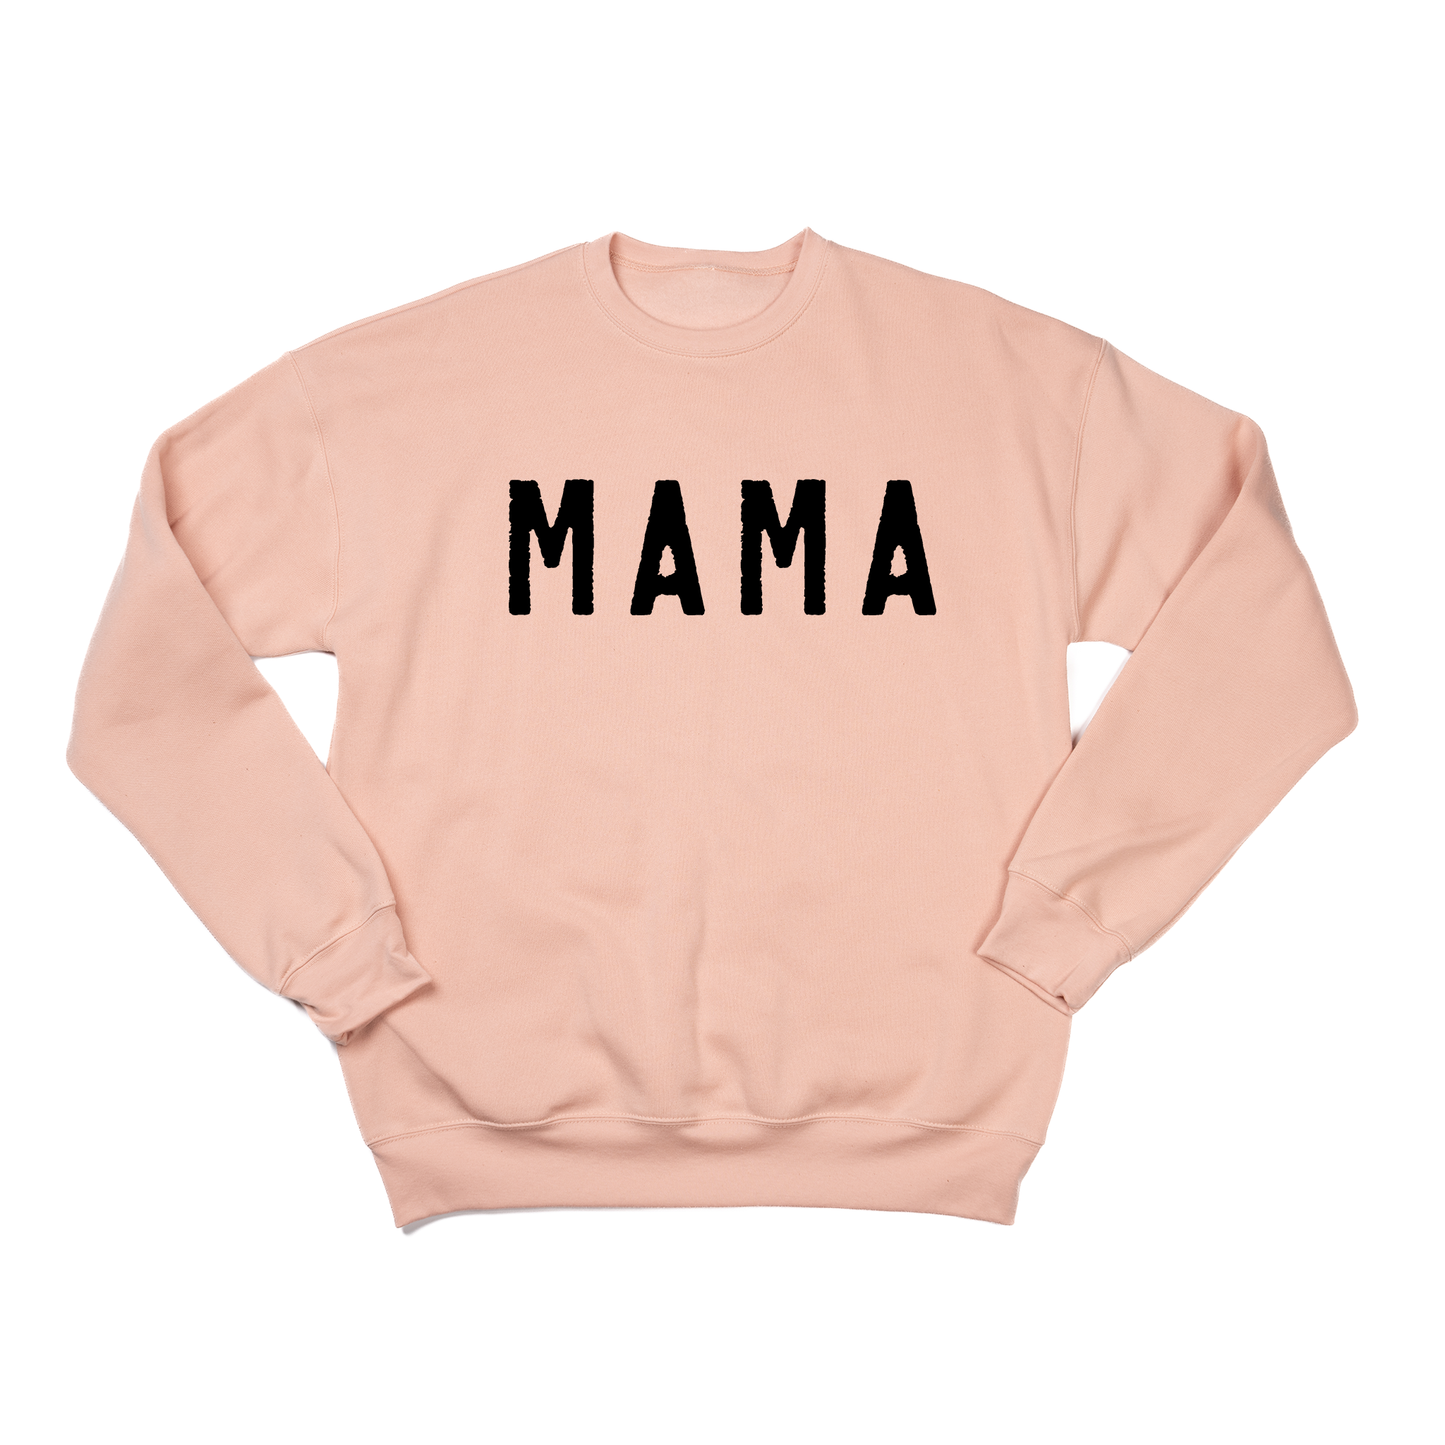 Mama (Rough, Black) - Sweatshirt (Peach)